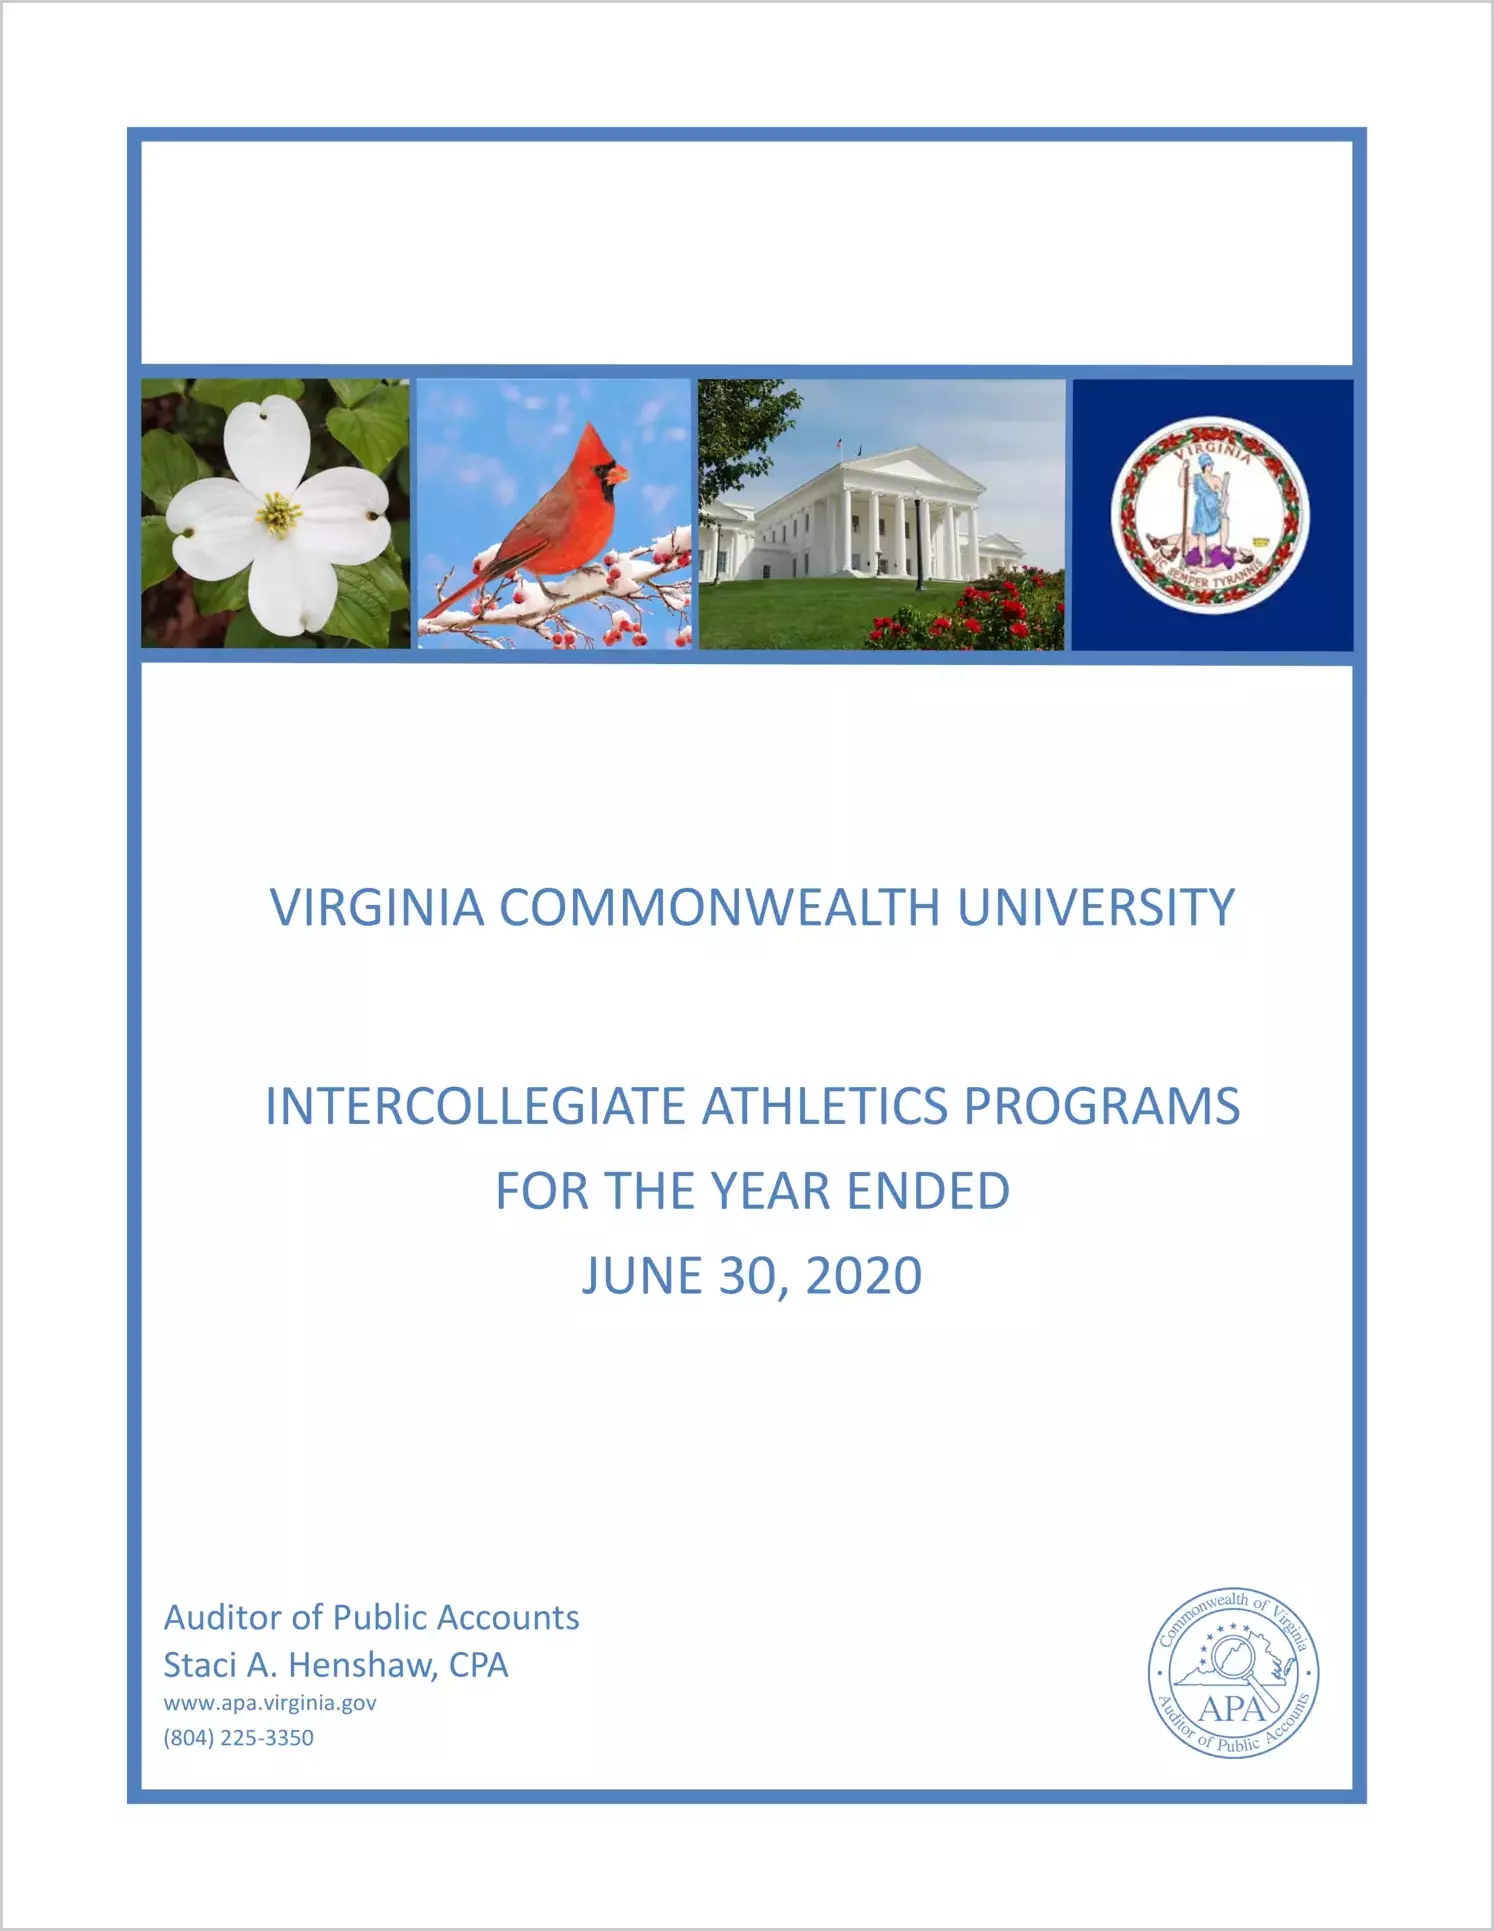 Virginia Commonwealth University Intercollegiate Athletics Programs for the year ended June 30, 2020